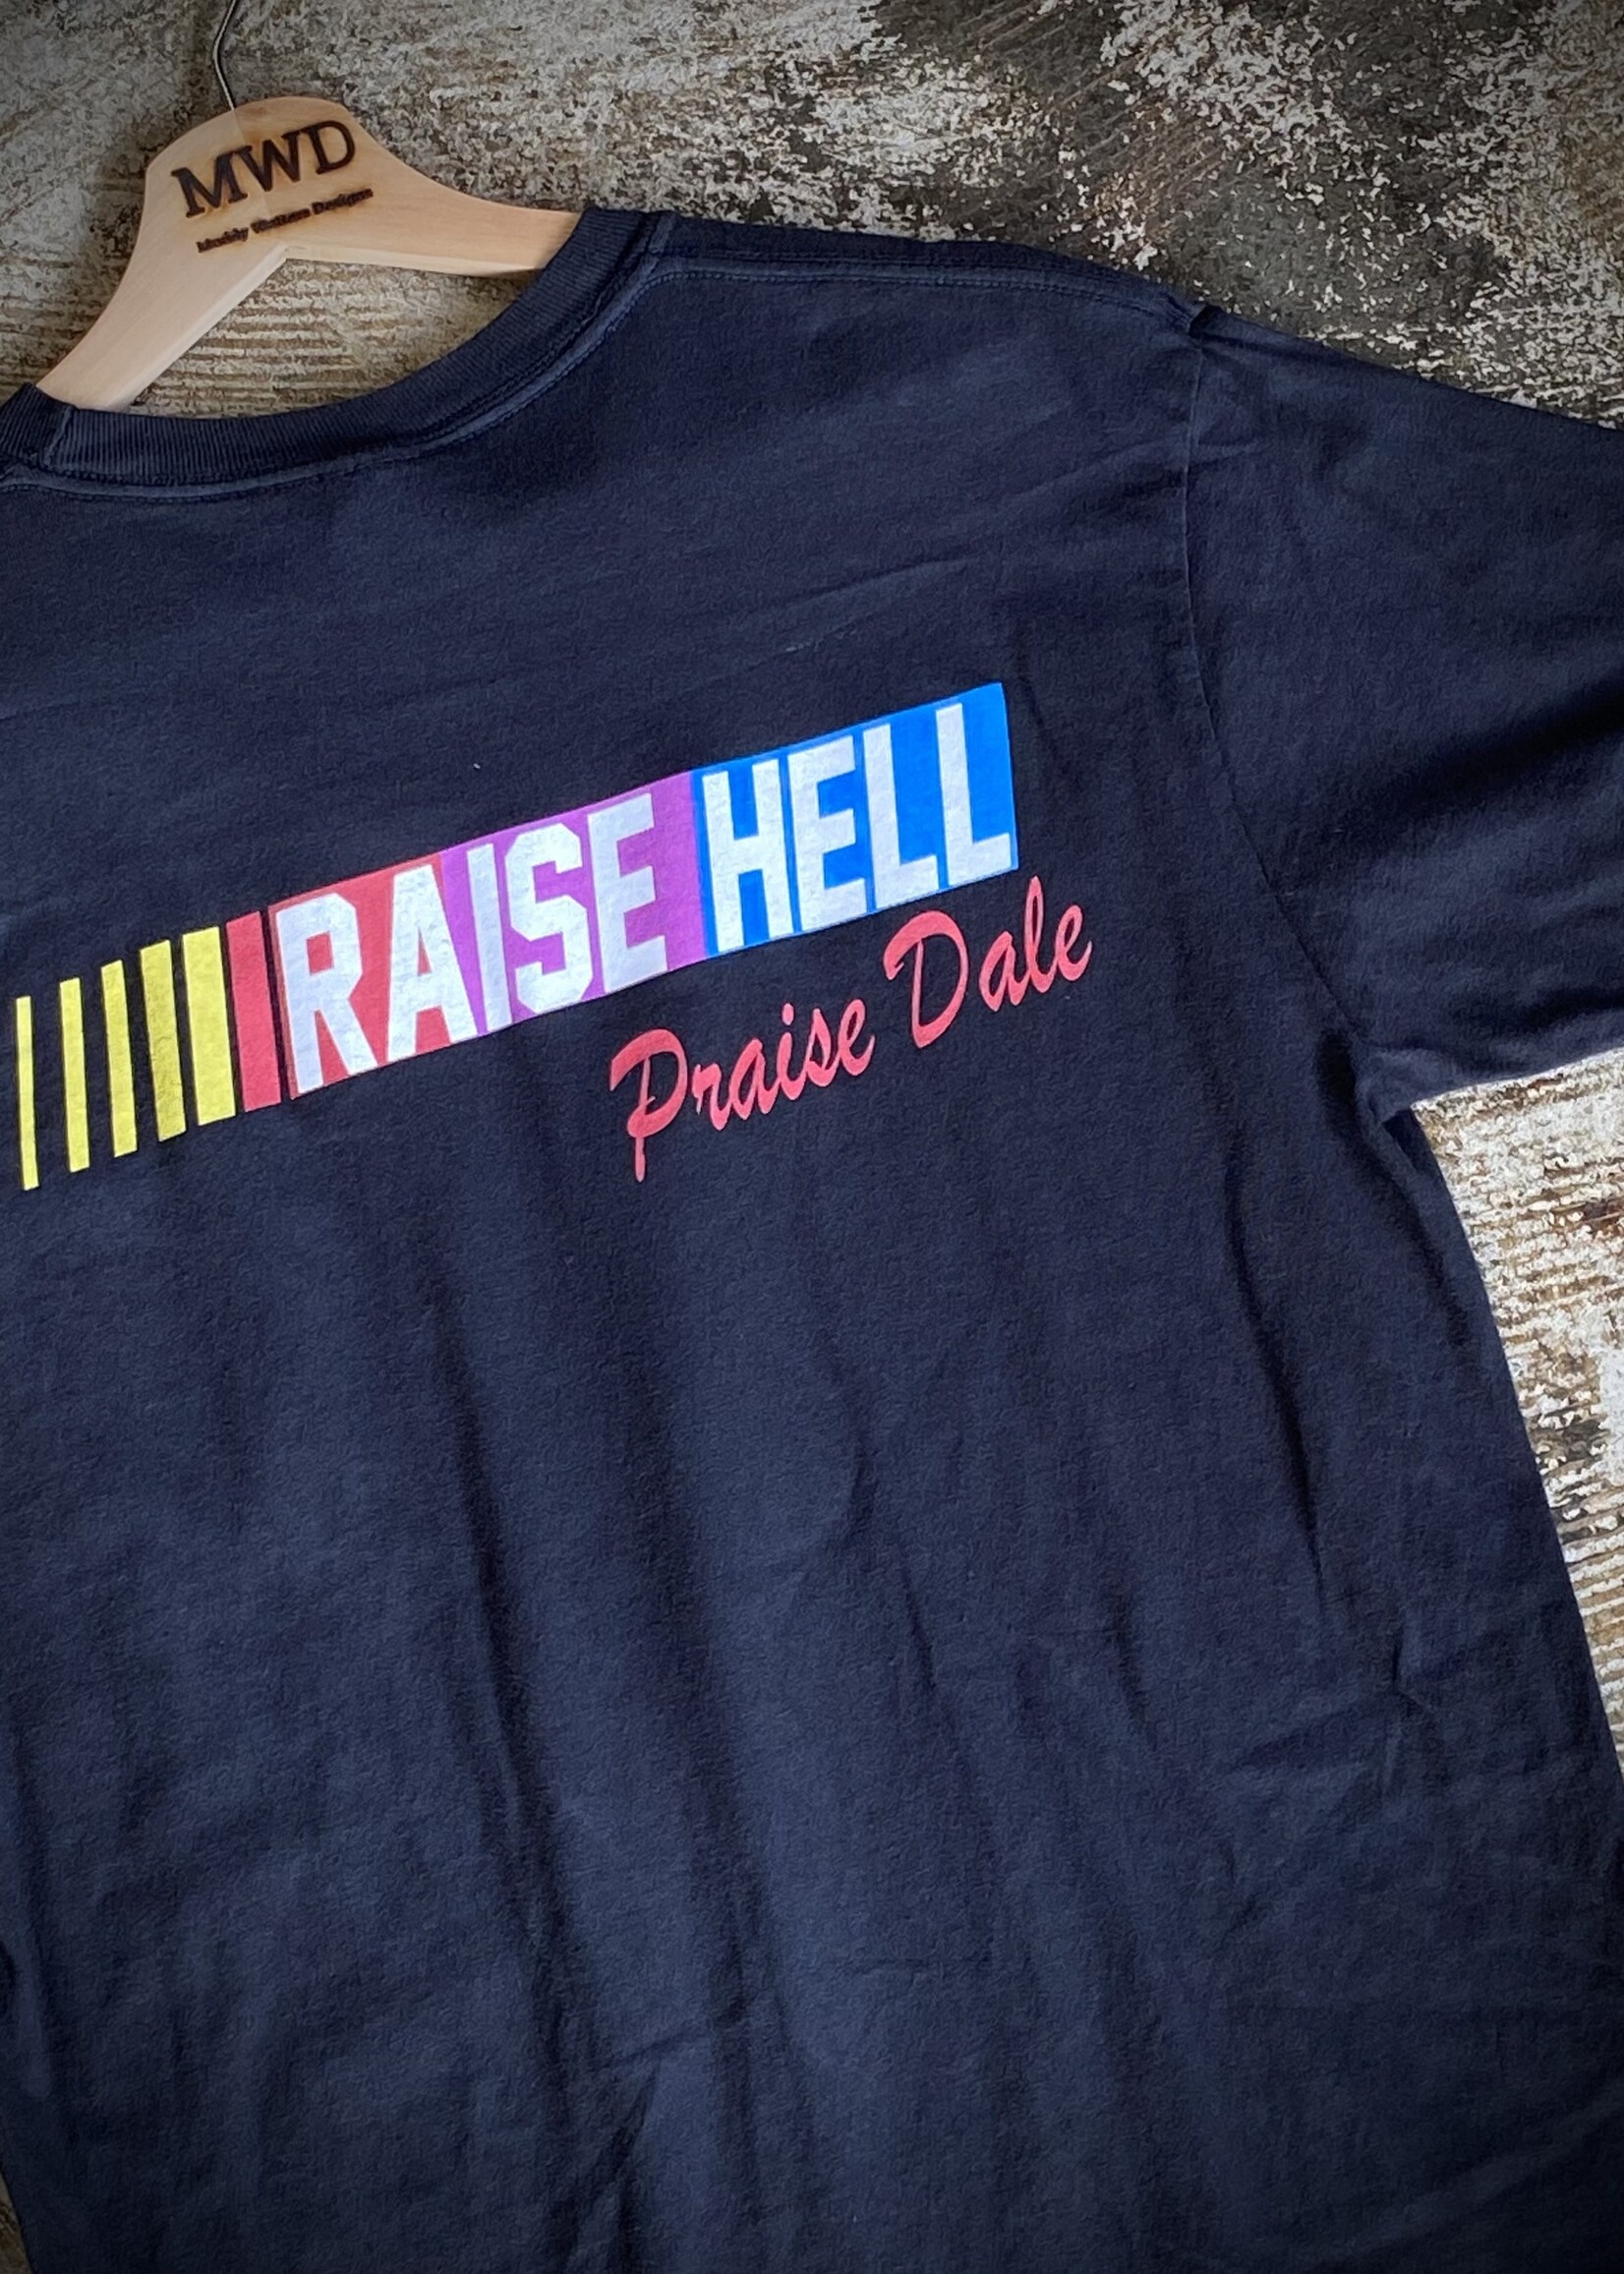 Old Row Old Row -  Raise Hell Praise Dale